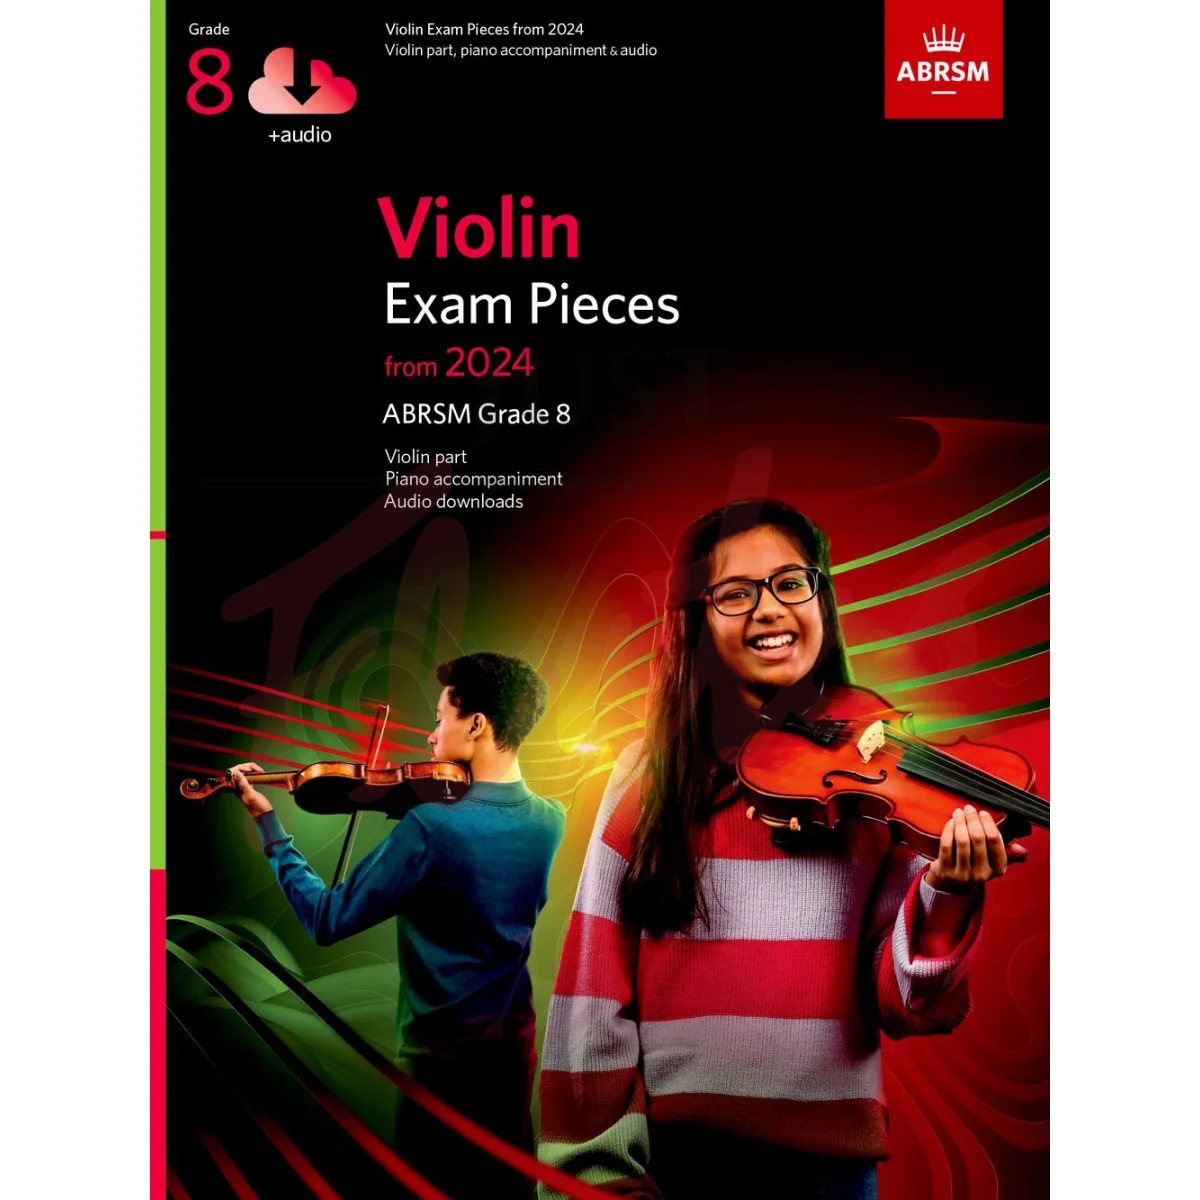 Violin Exam Pieces from 2024, Grade 8